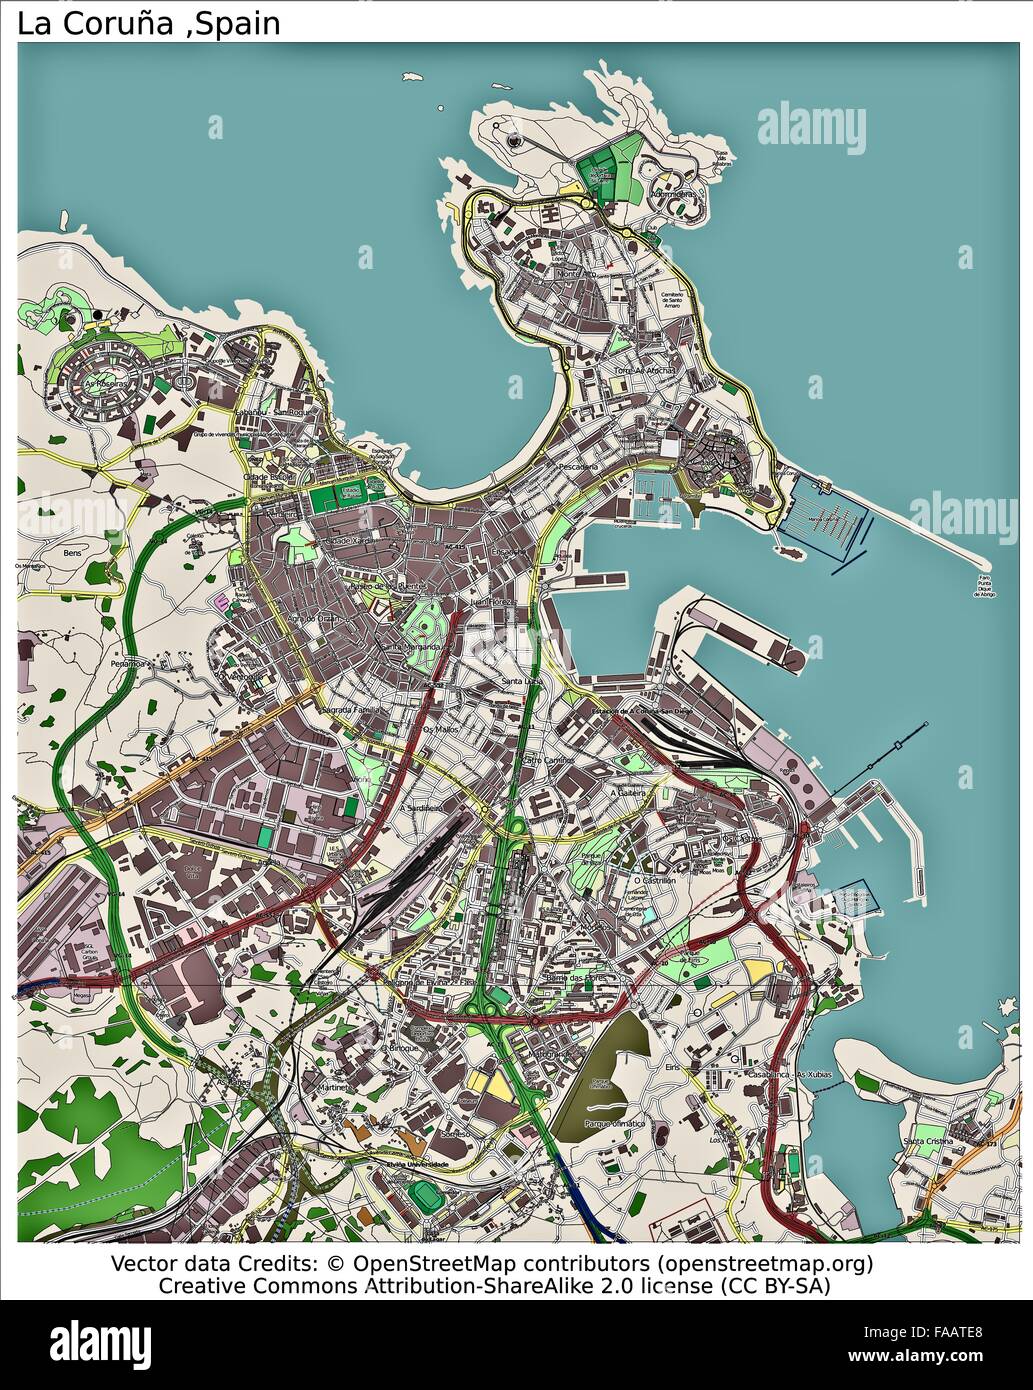 La Coruna Spain City Map FAATE8 